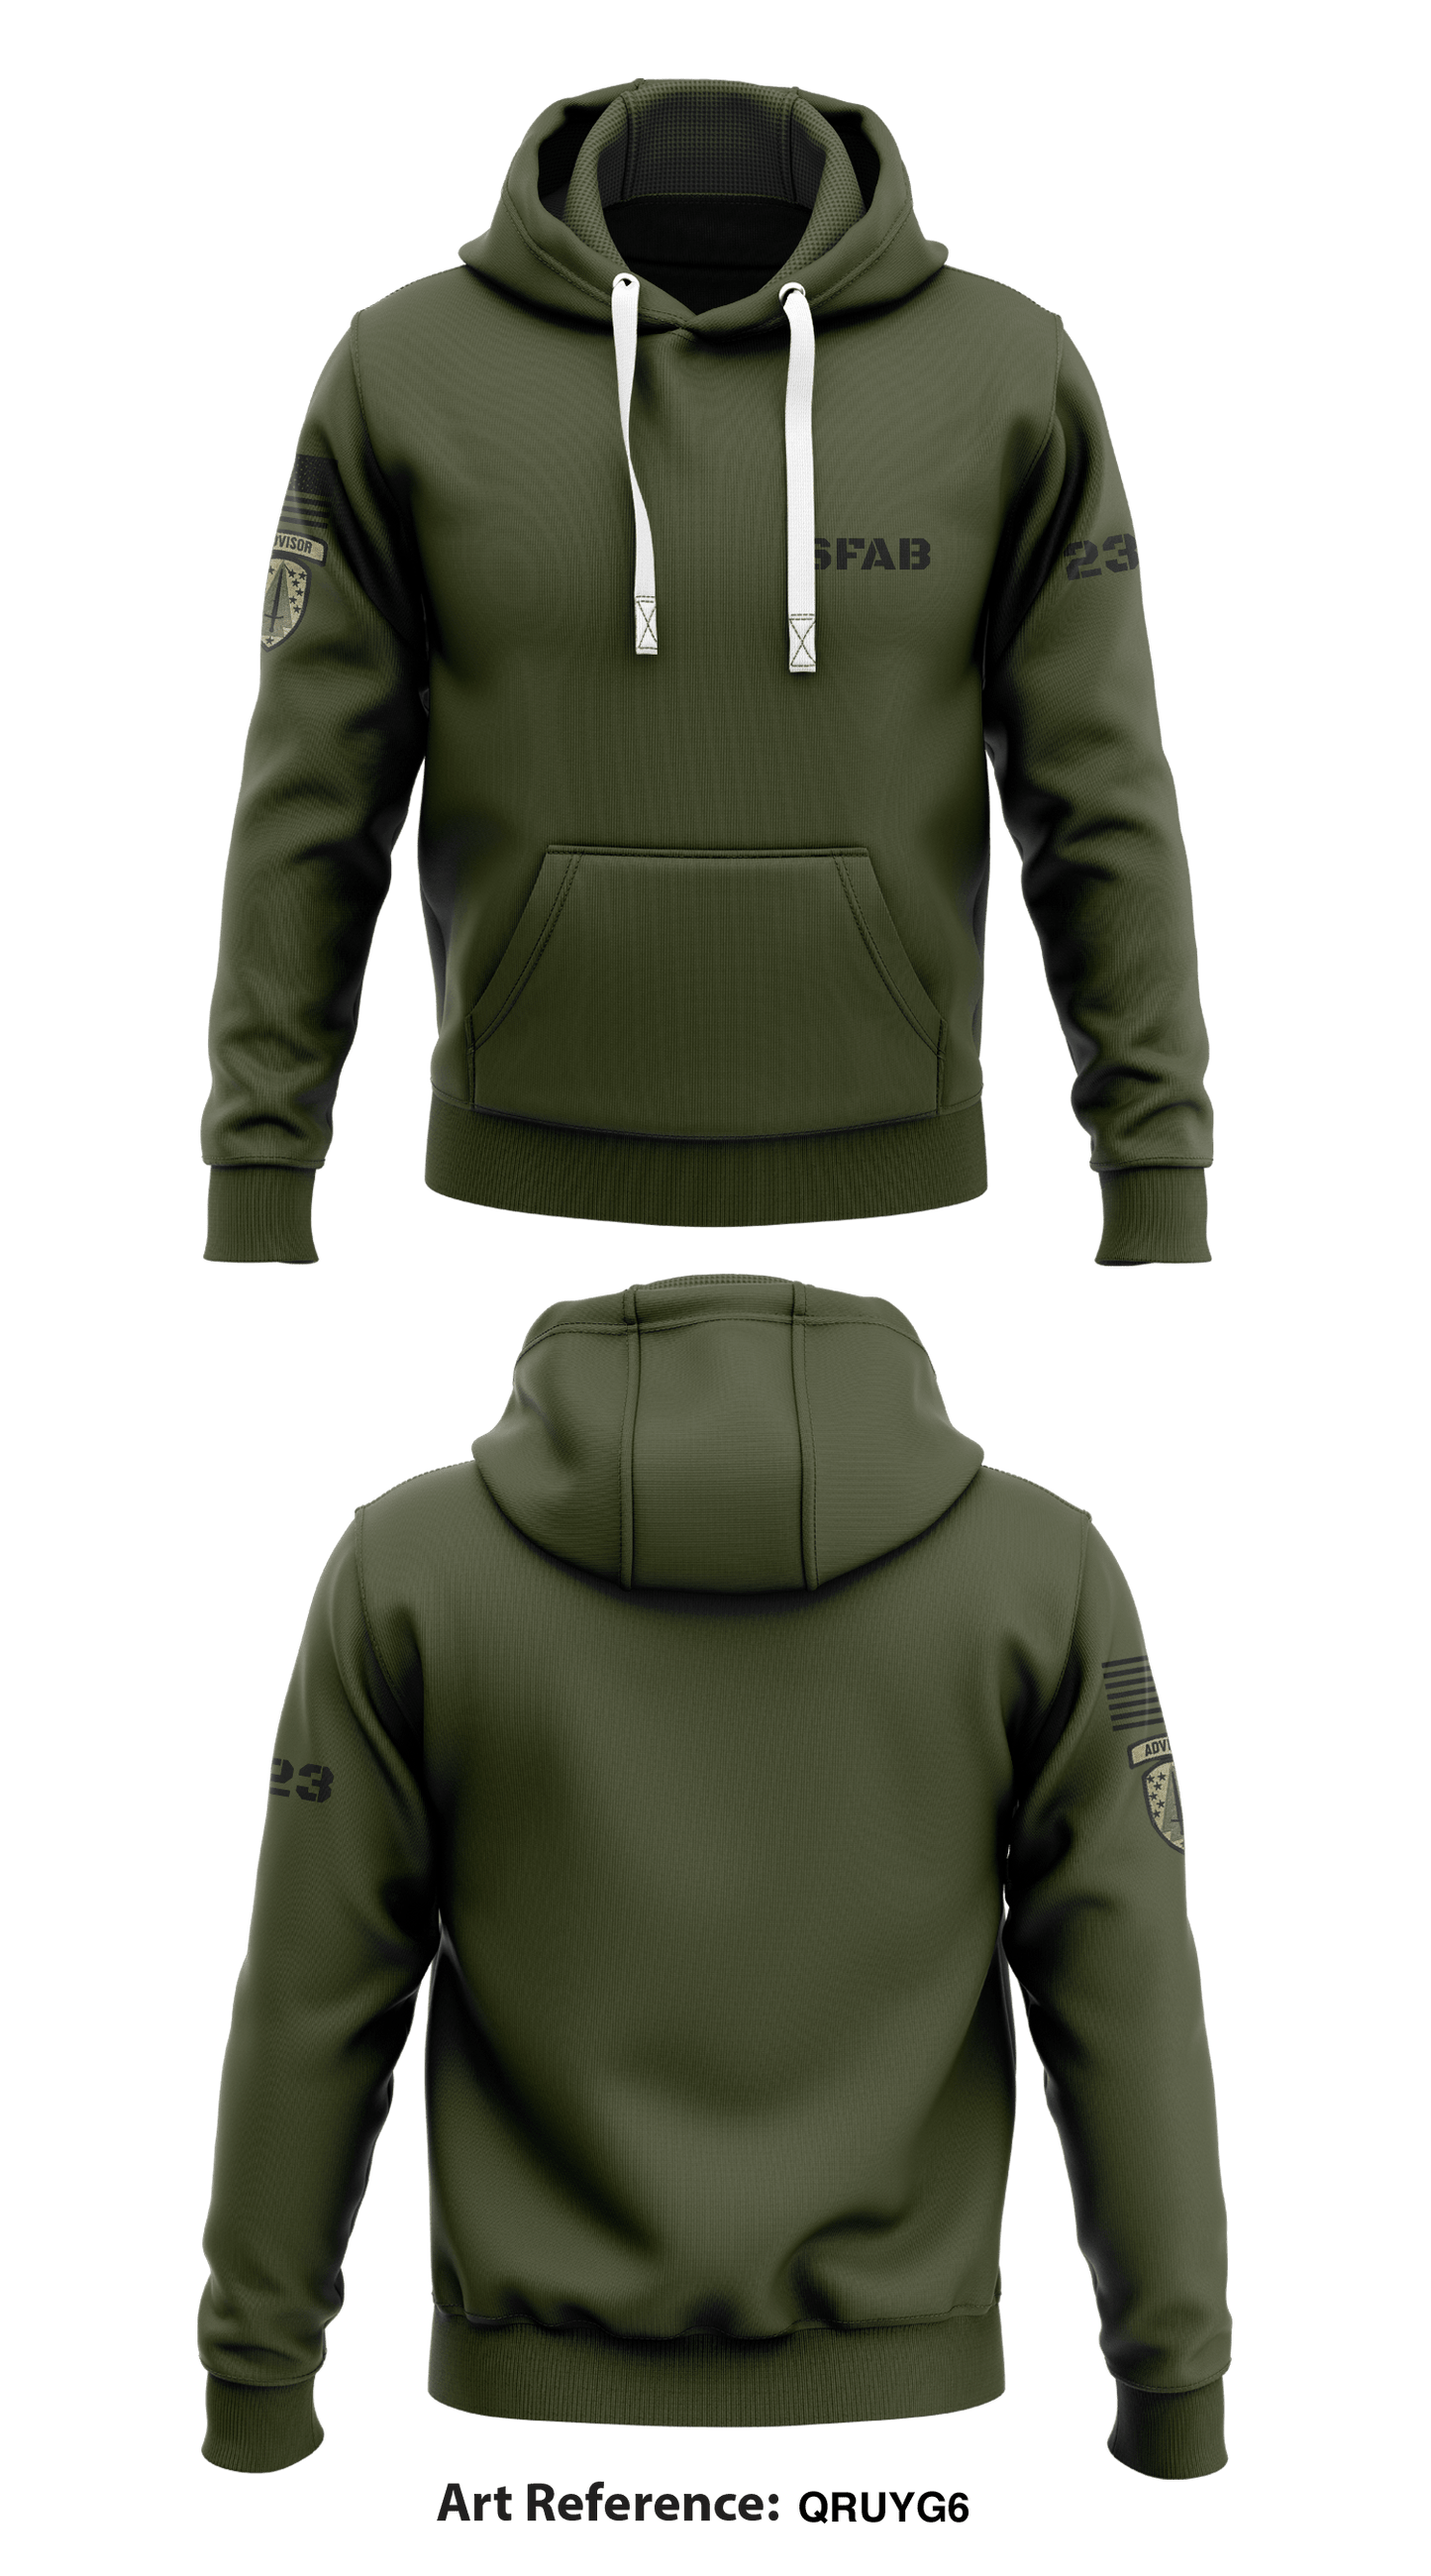 SFAB2  Core Men's Hooded Performance Sweatshirt - QRUYg6